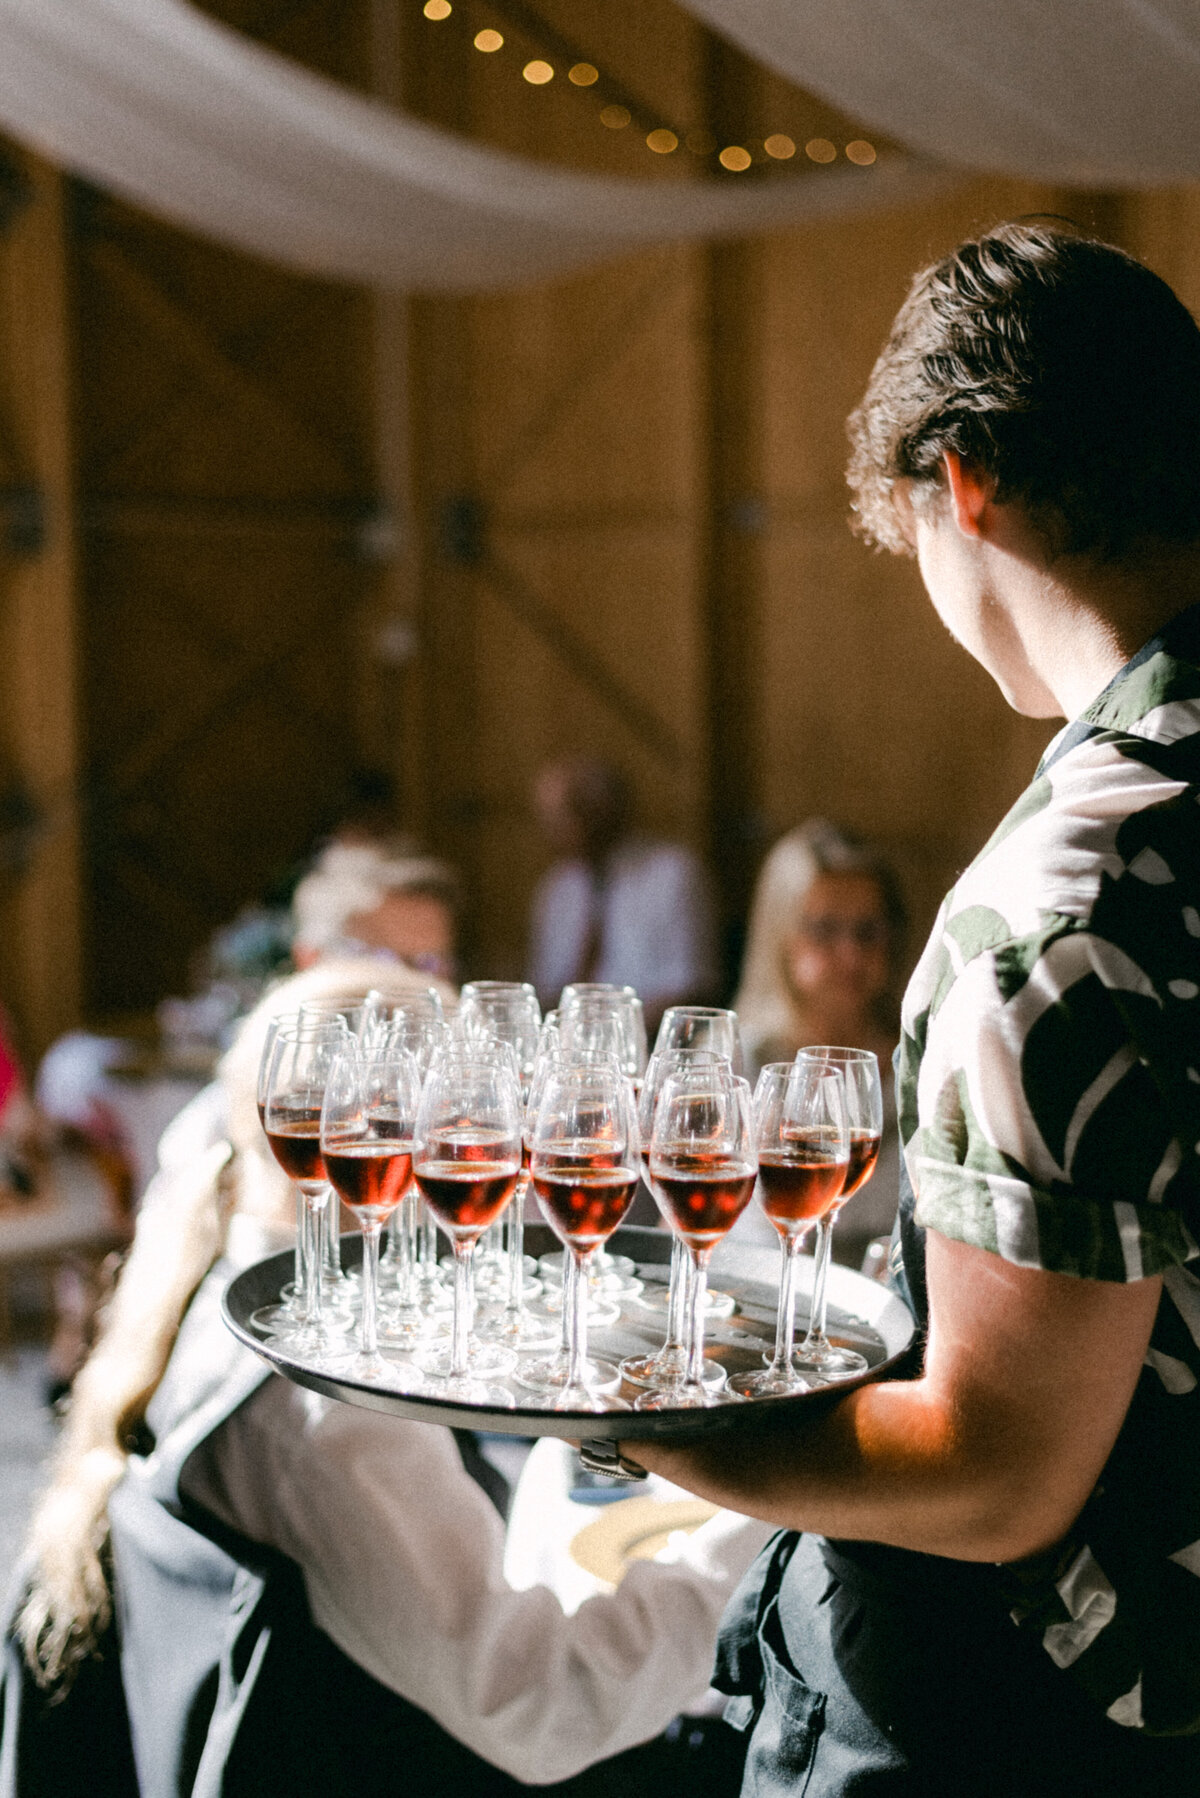 A waiter serving drinks in an image captured by wedding photographer Hannika Gabrielsson.